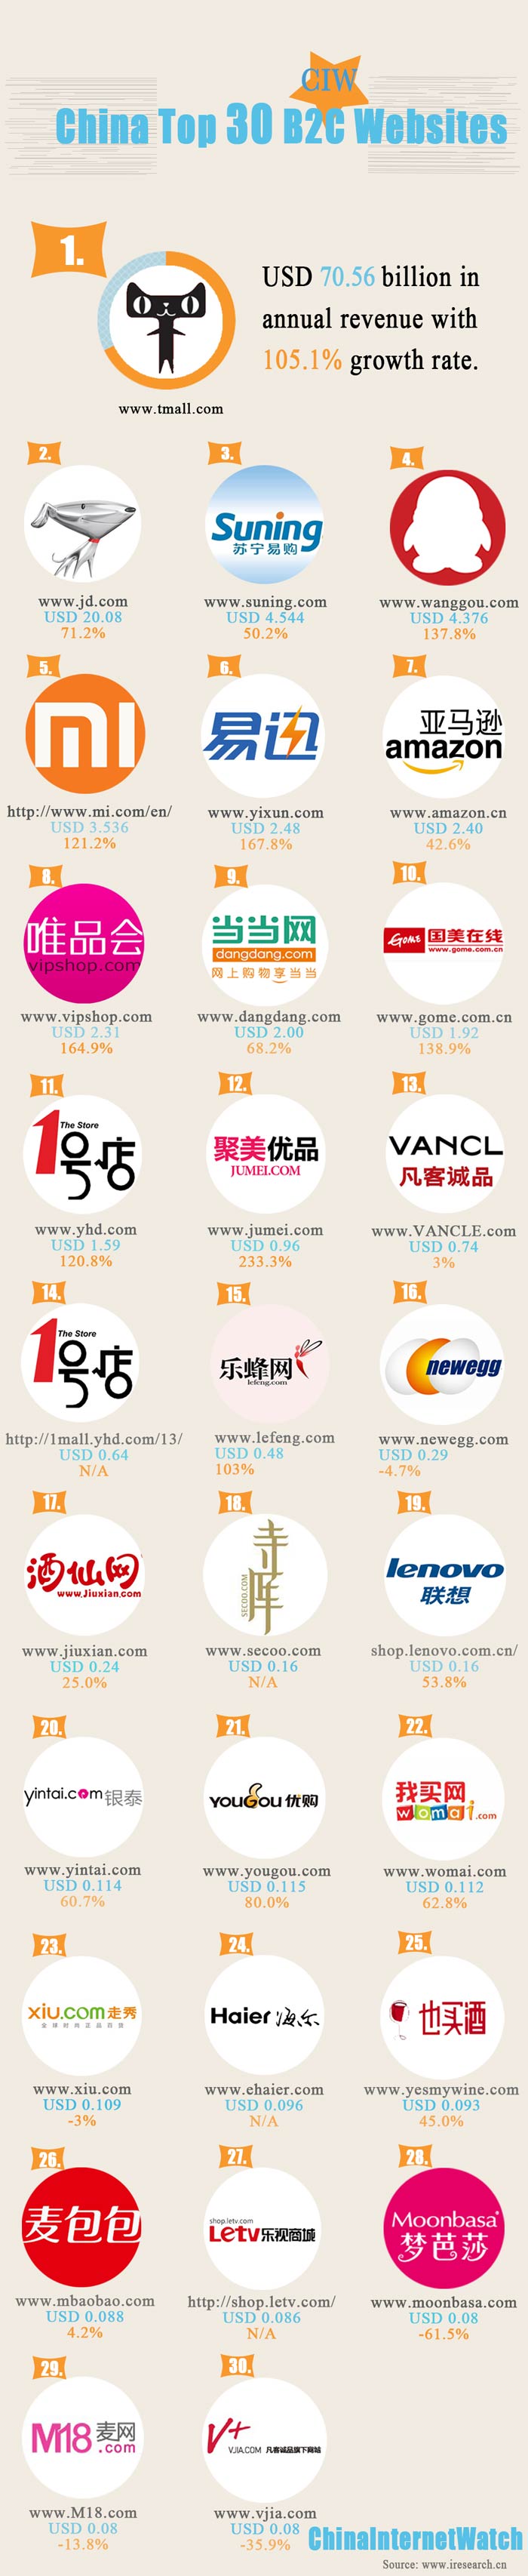 china-top-20-b2c-website